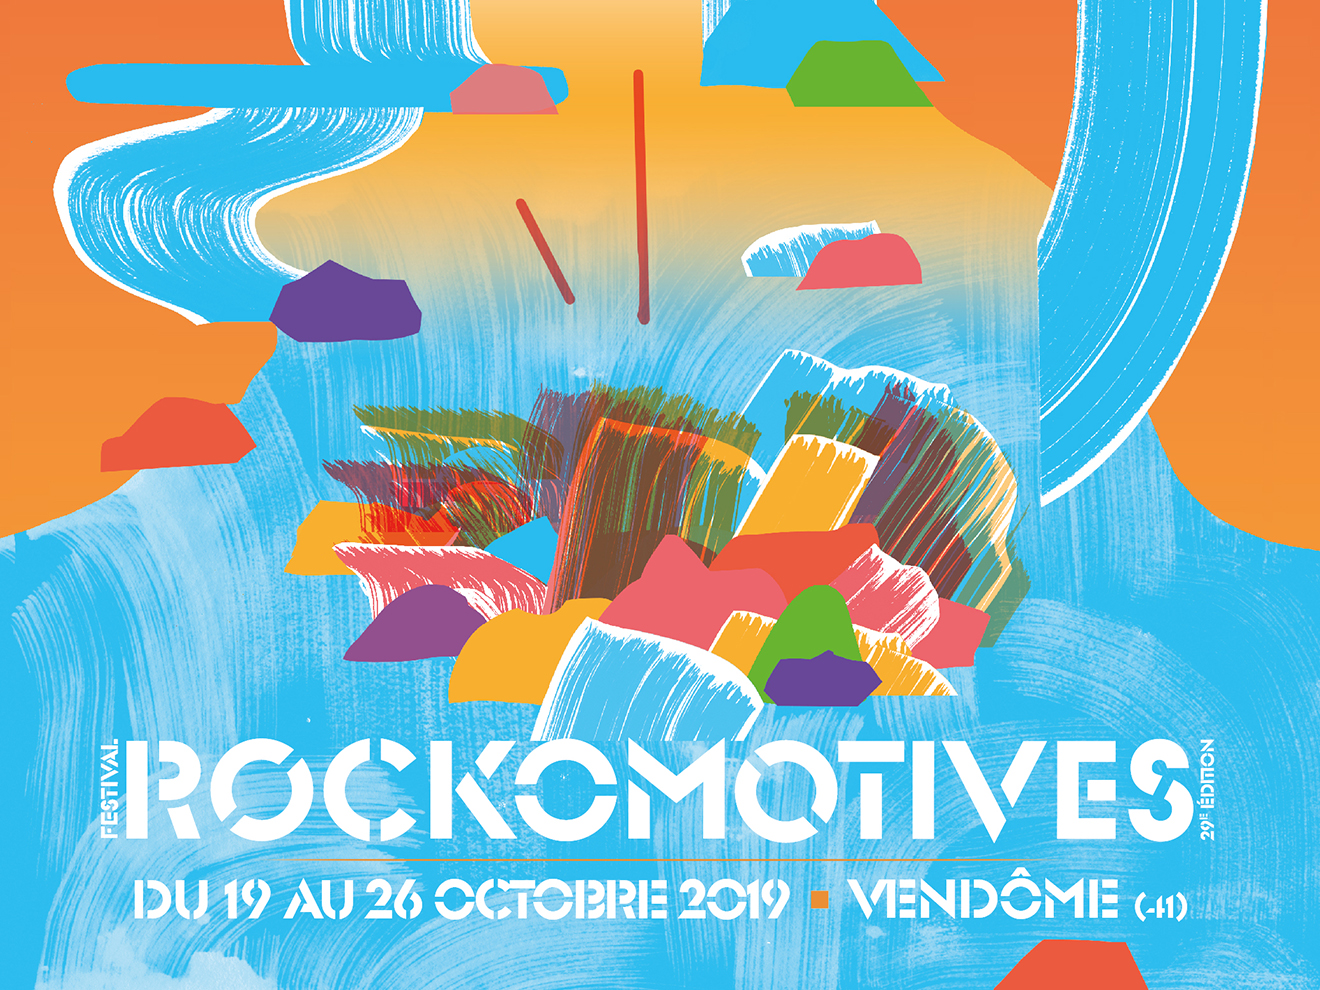 Festival Rockomotives 2019 - Vendôme